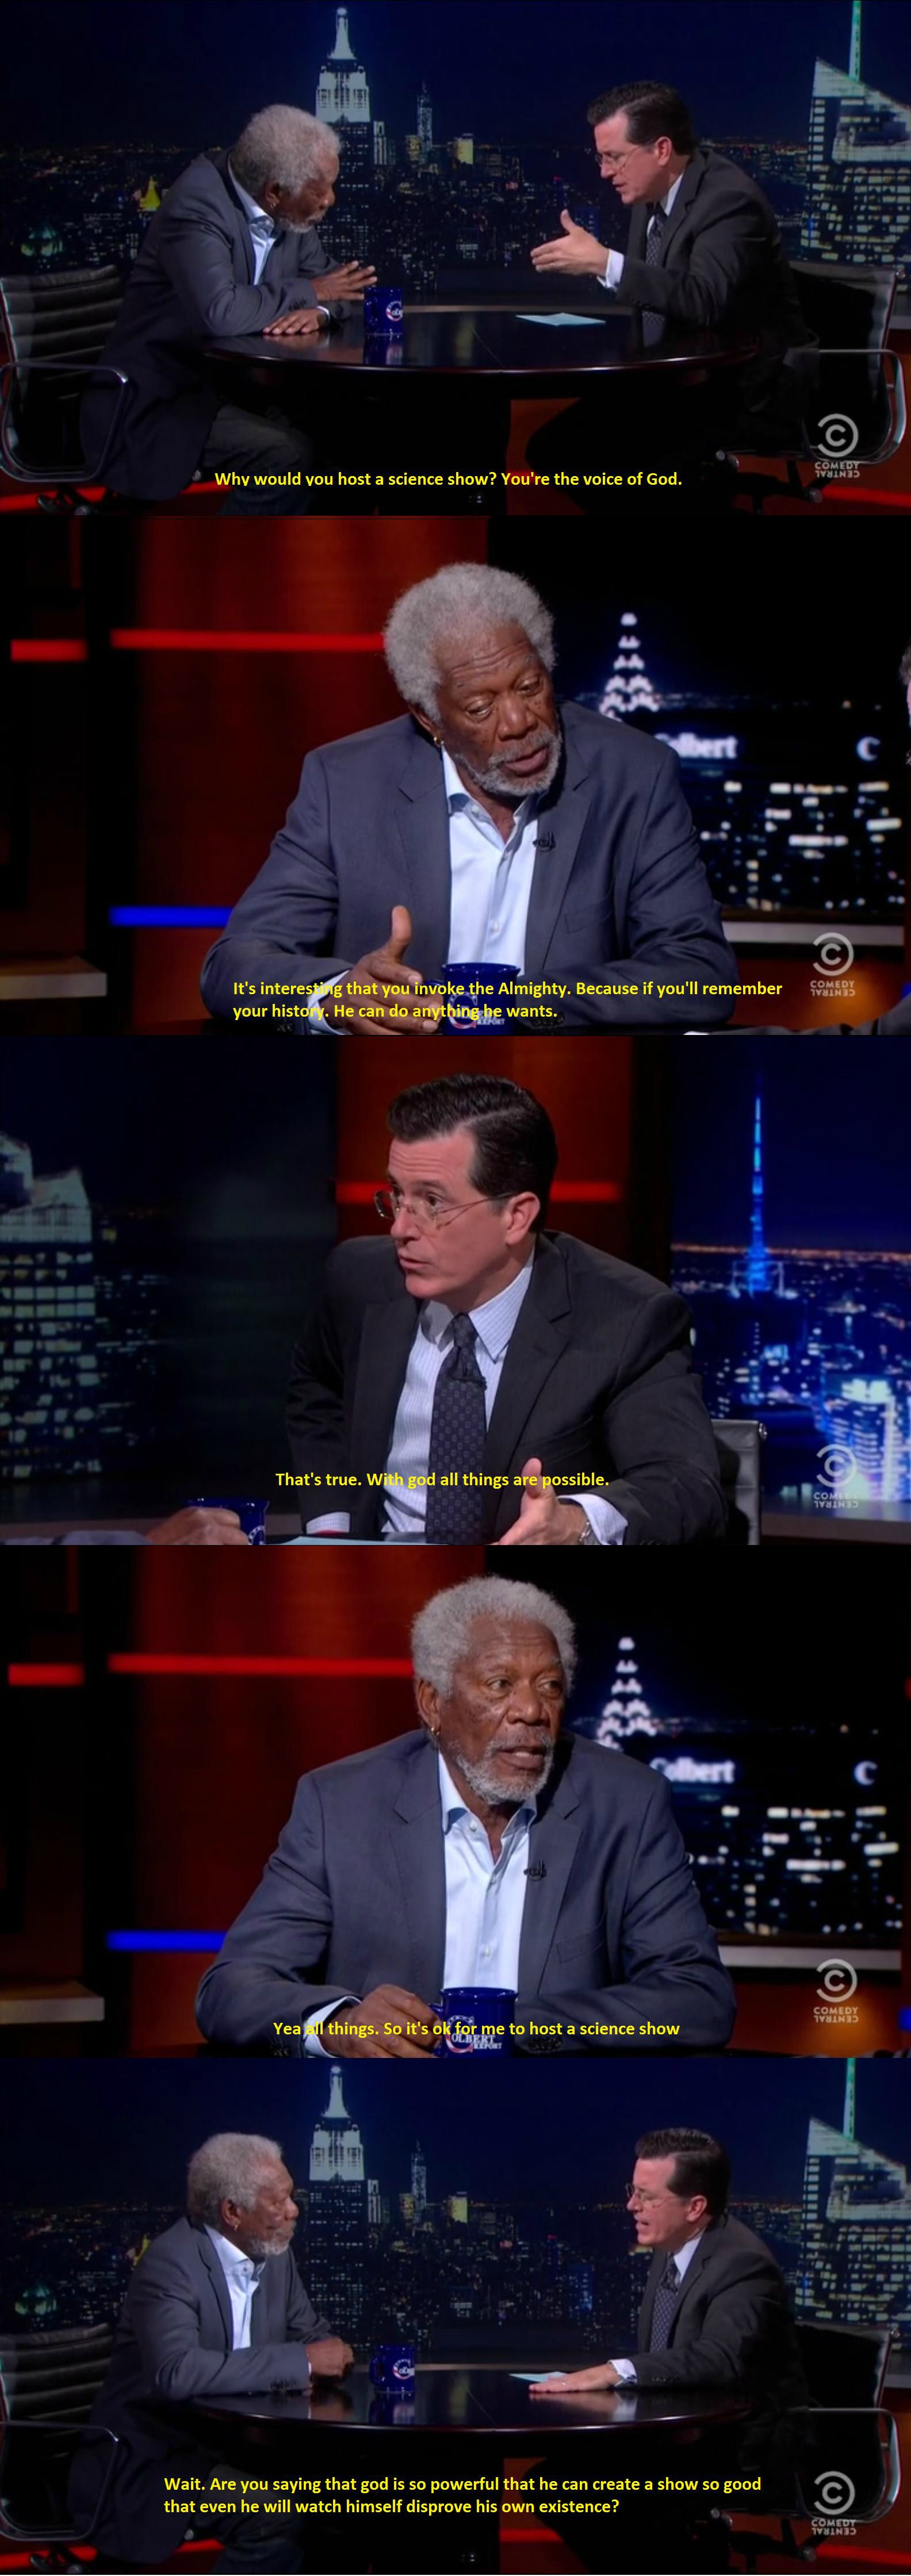 Colbert Interviewing Morgan Freeman on "Through the Wormhole"